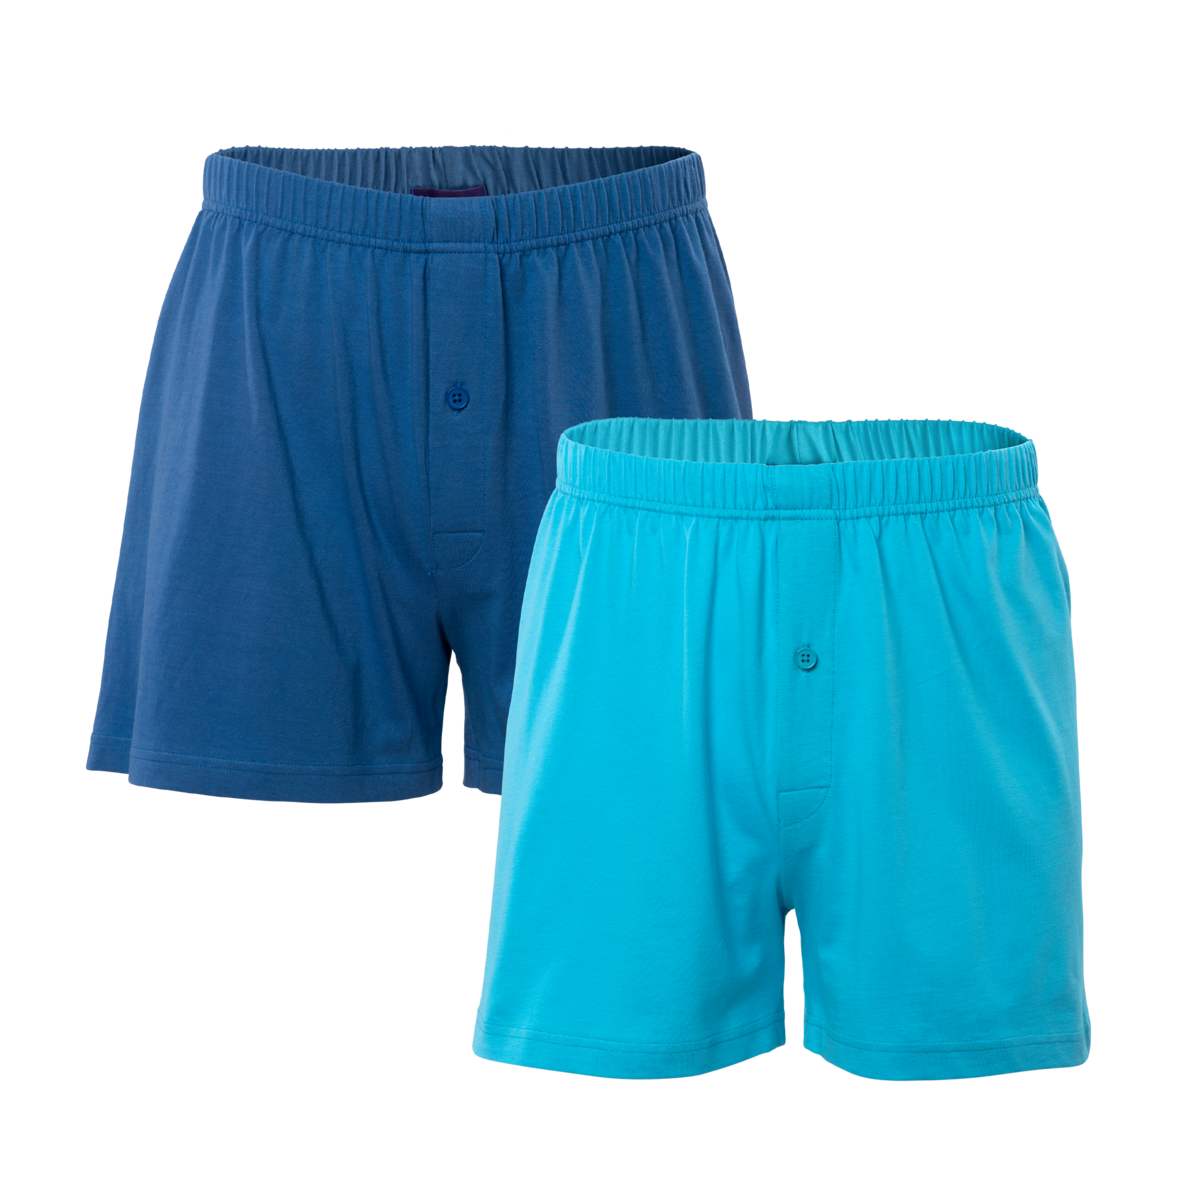 Blue Boxer shorts, pack of 2, BEN